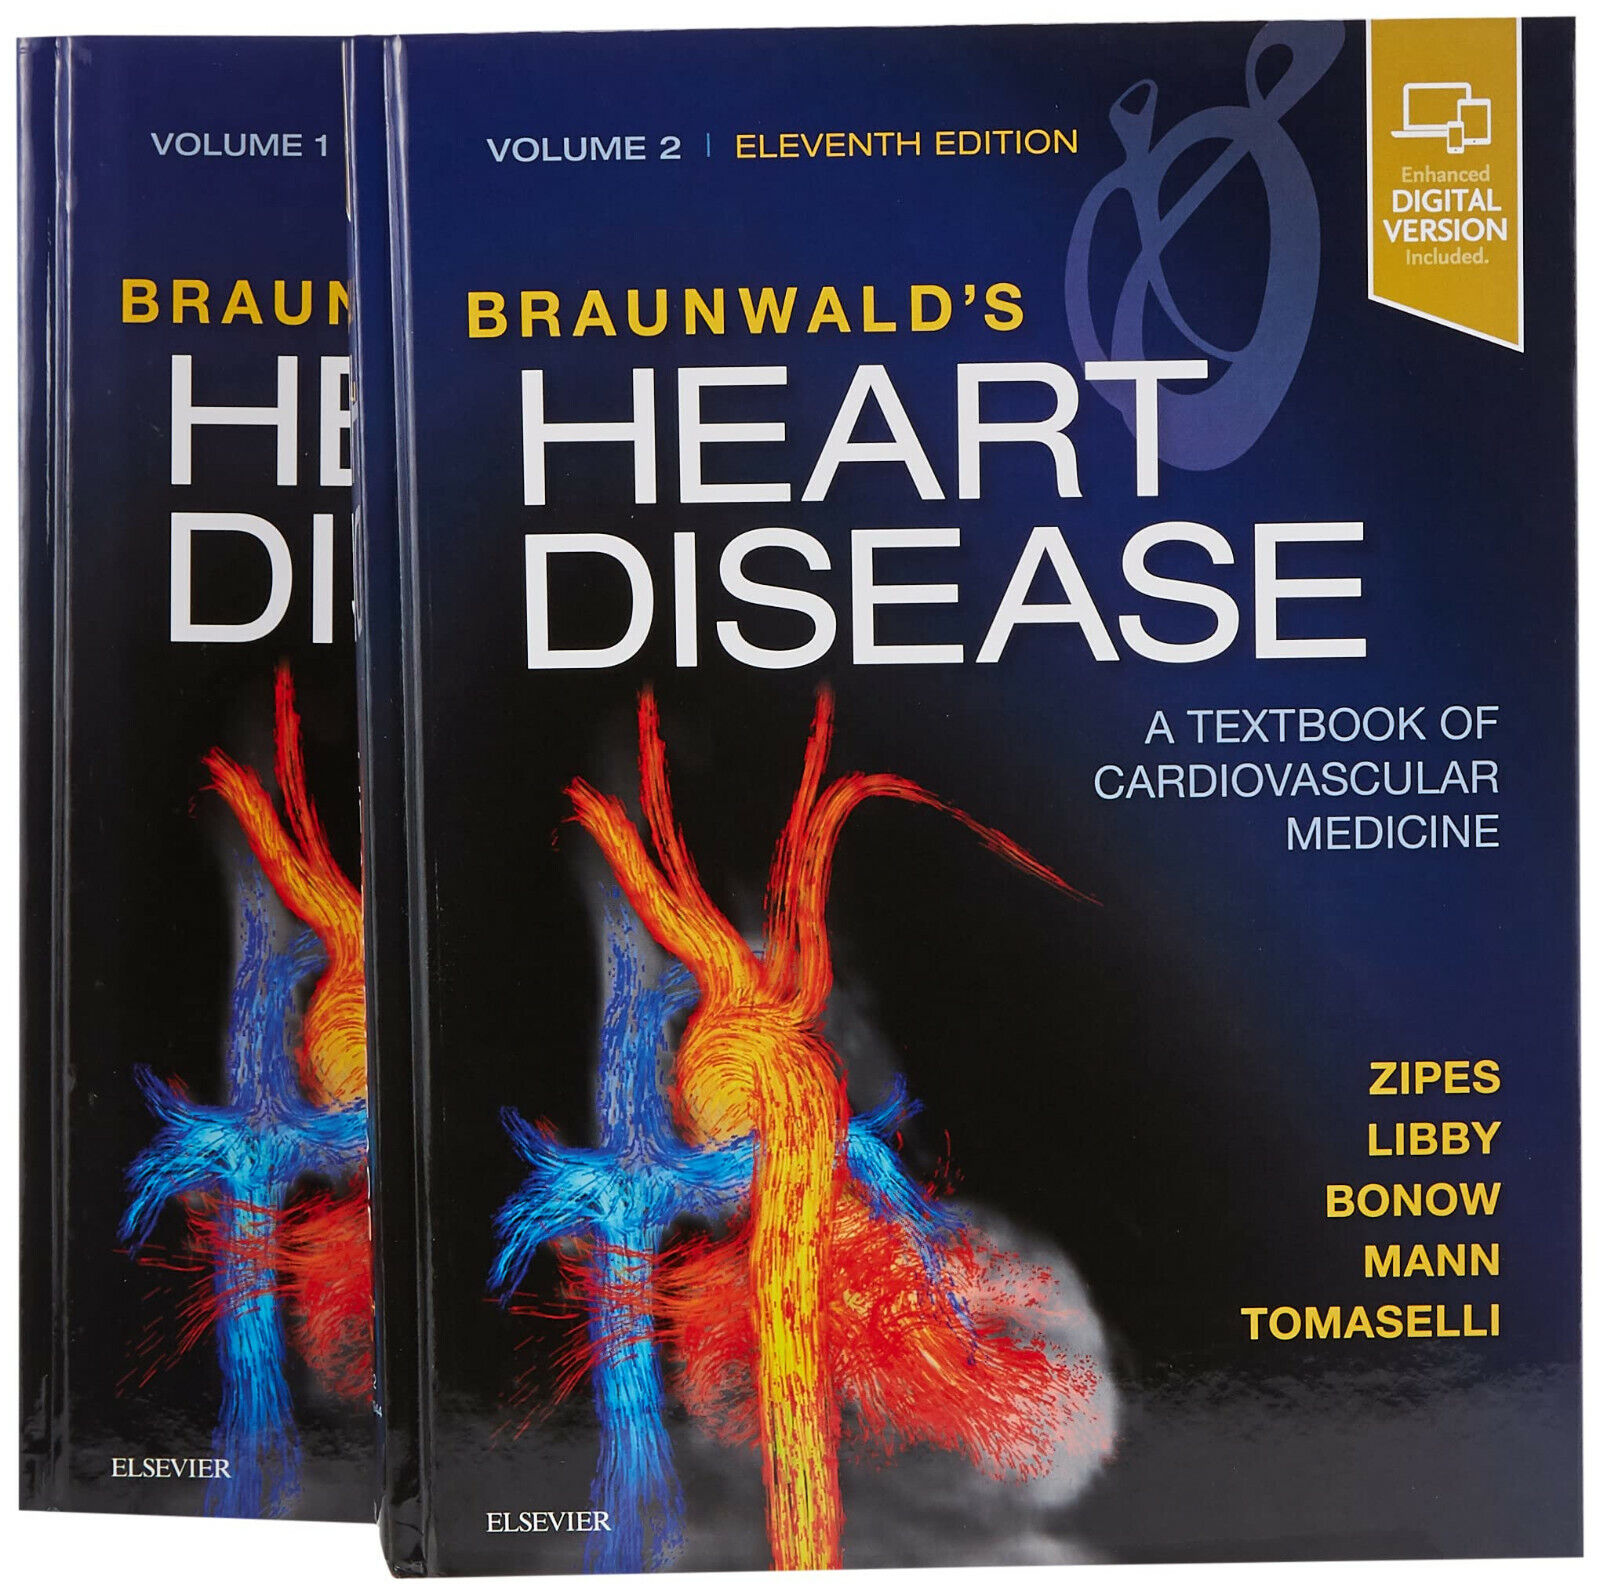 Braunwald's Heart Disease - Elsevier, 2018